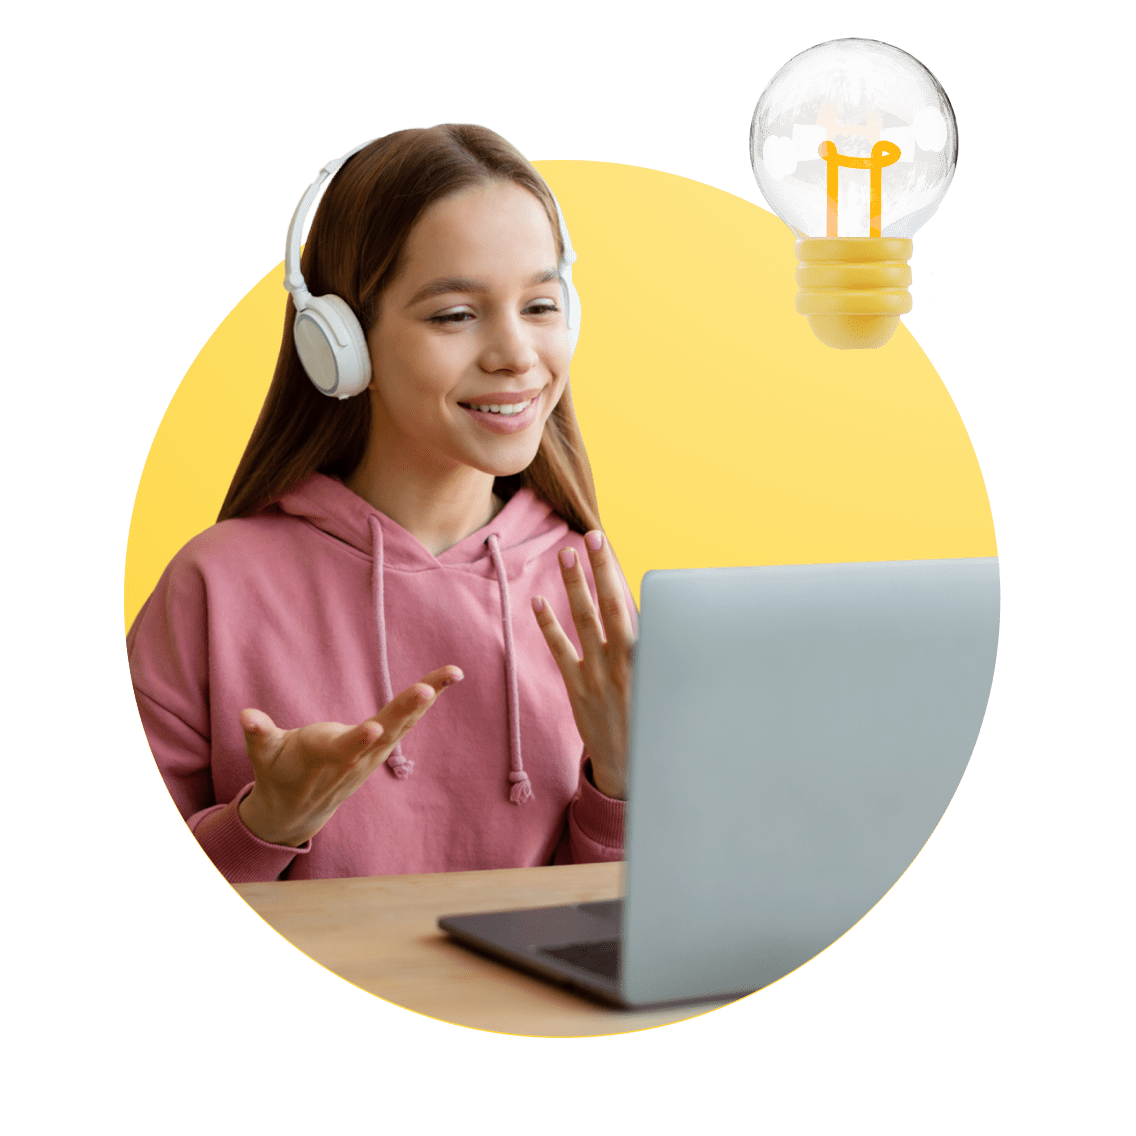 Florida Online Schools image 1 (name 4 Young Girl Desk Headphones Light)